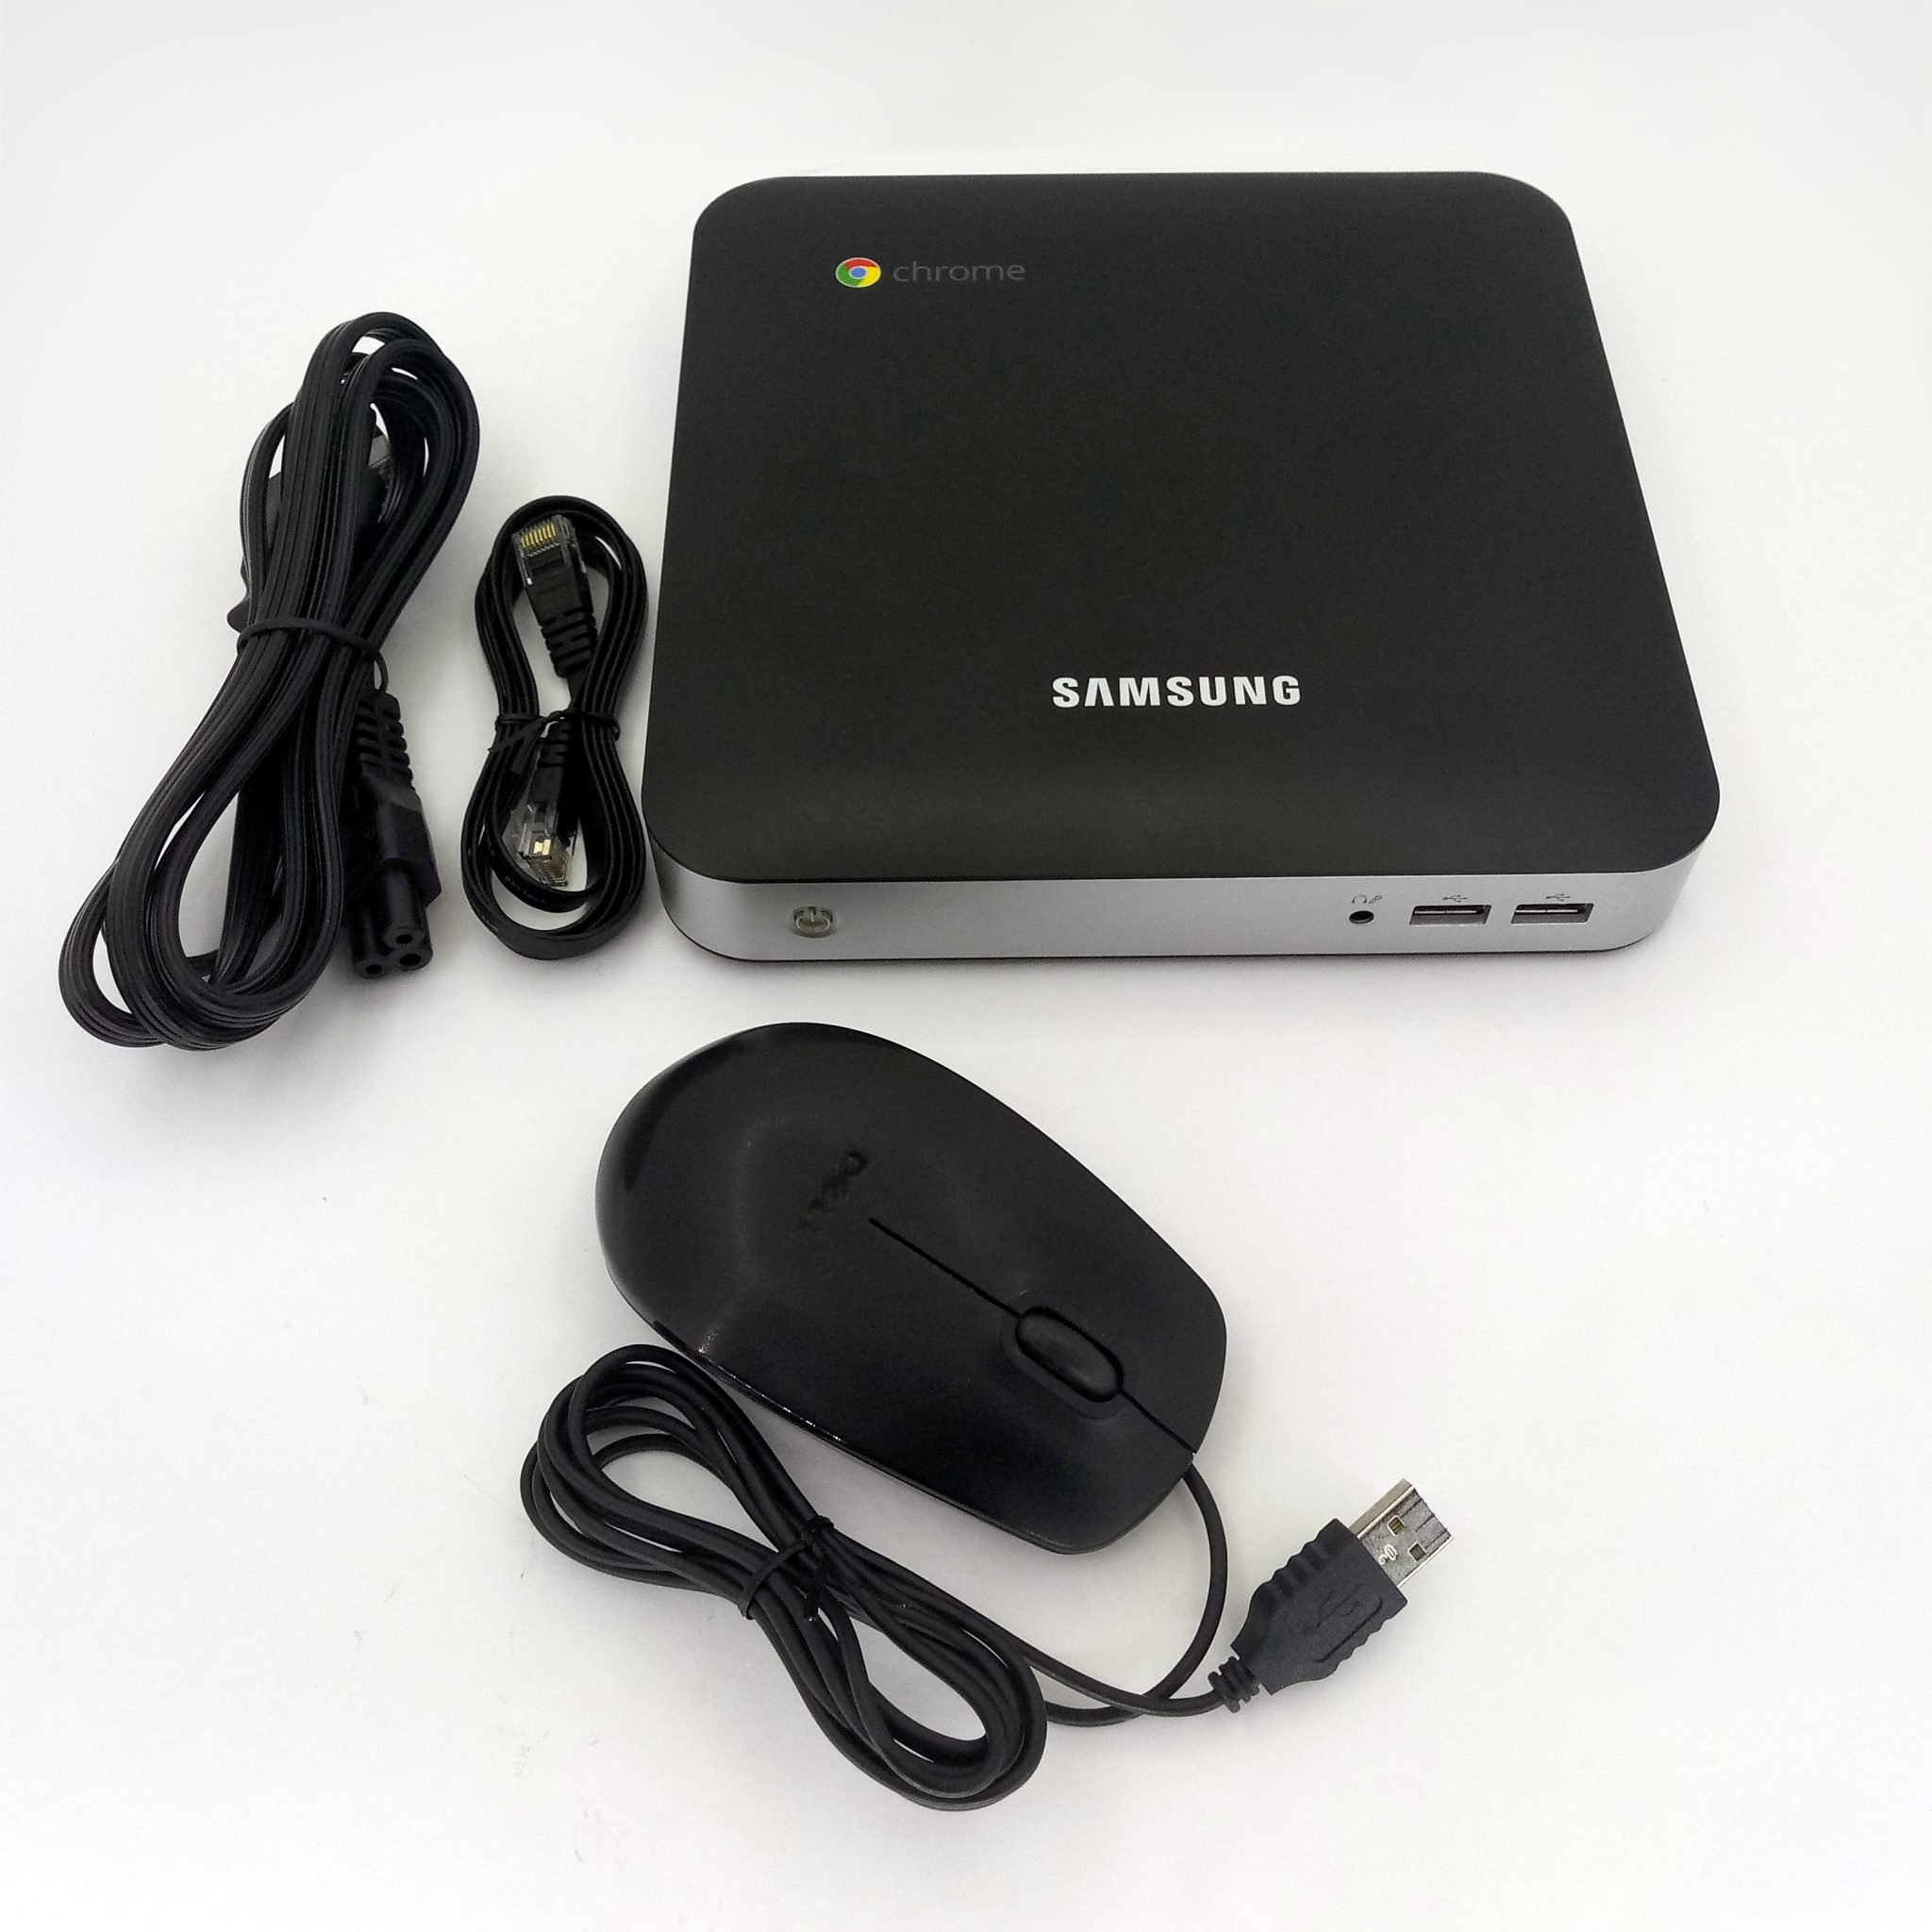 eBay #Sponsored Samsung Series 3 Chromebox XE300M22-A01US 